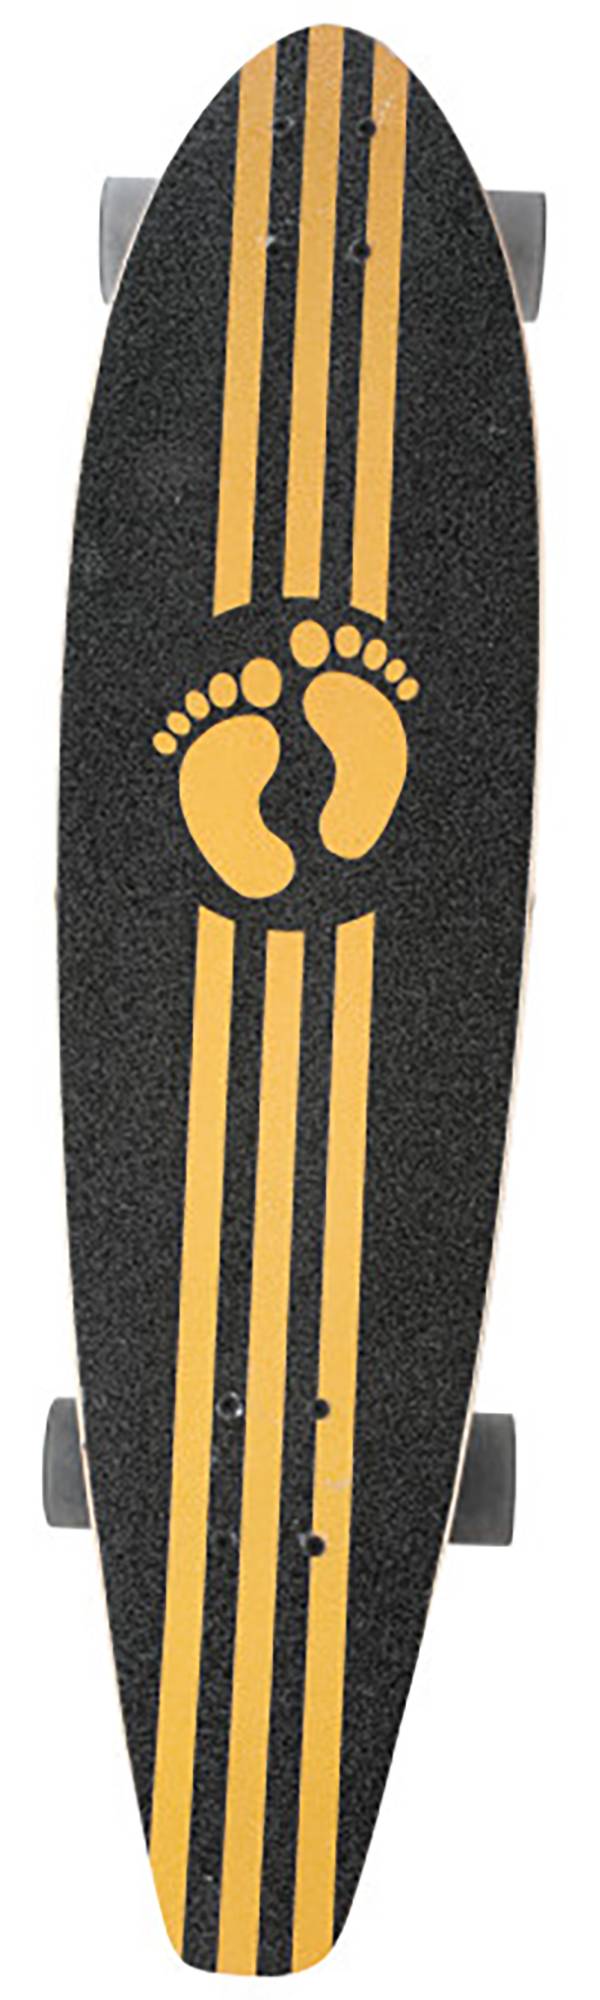 Tony Hawk 36" Cruiser Skateboard product image